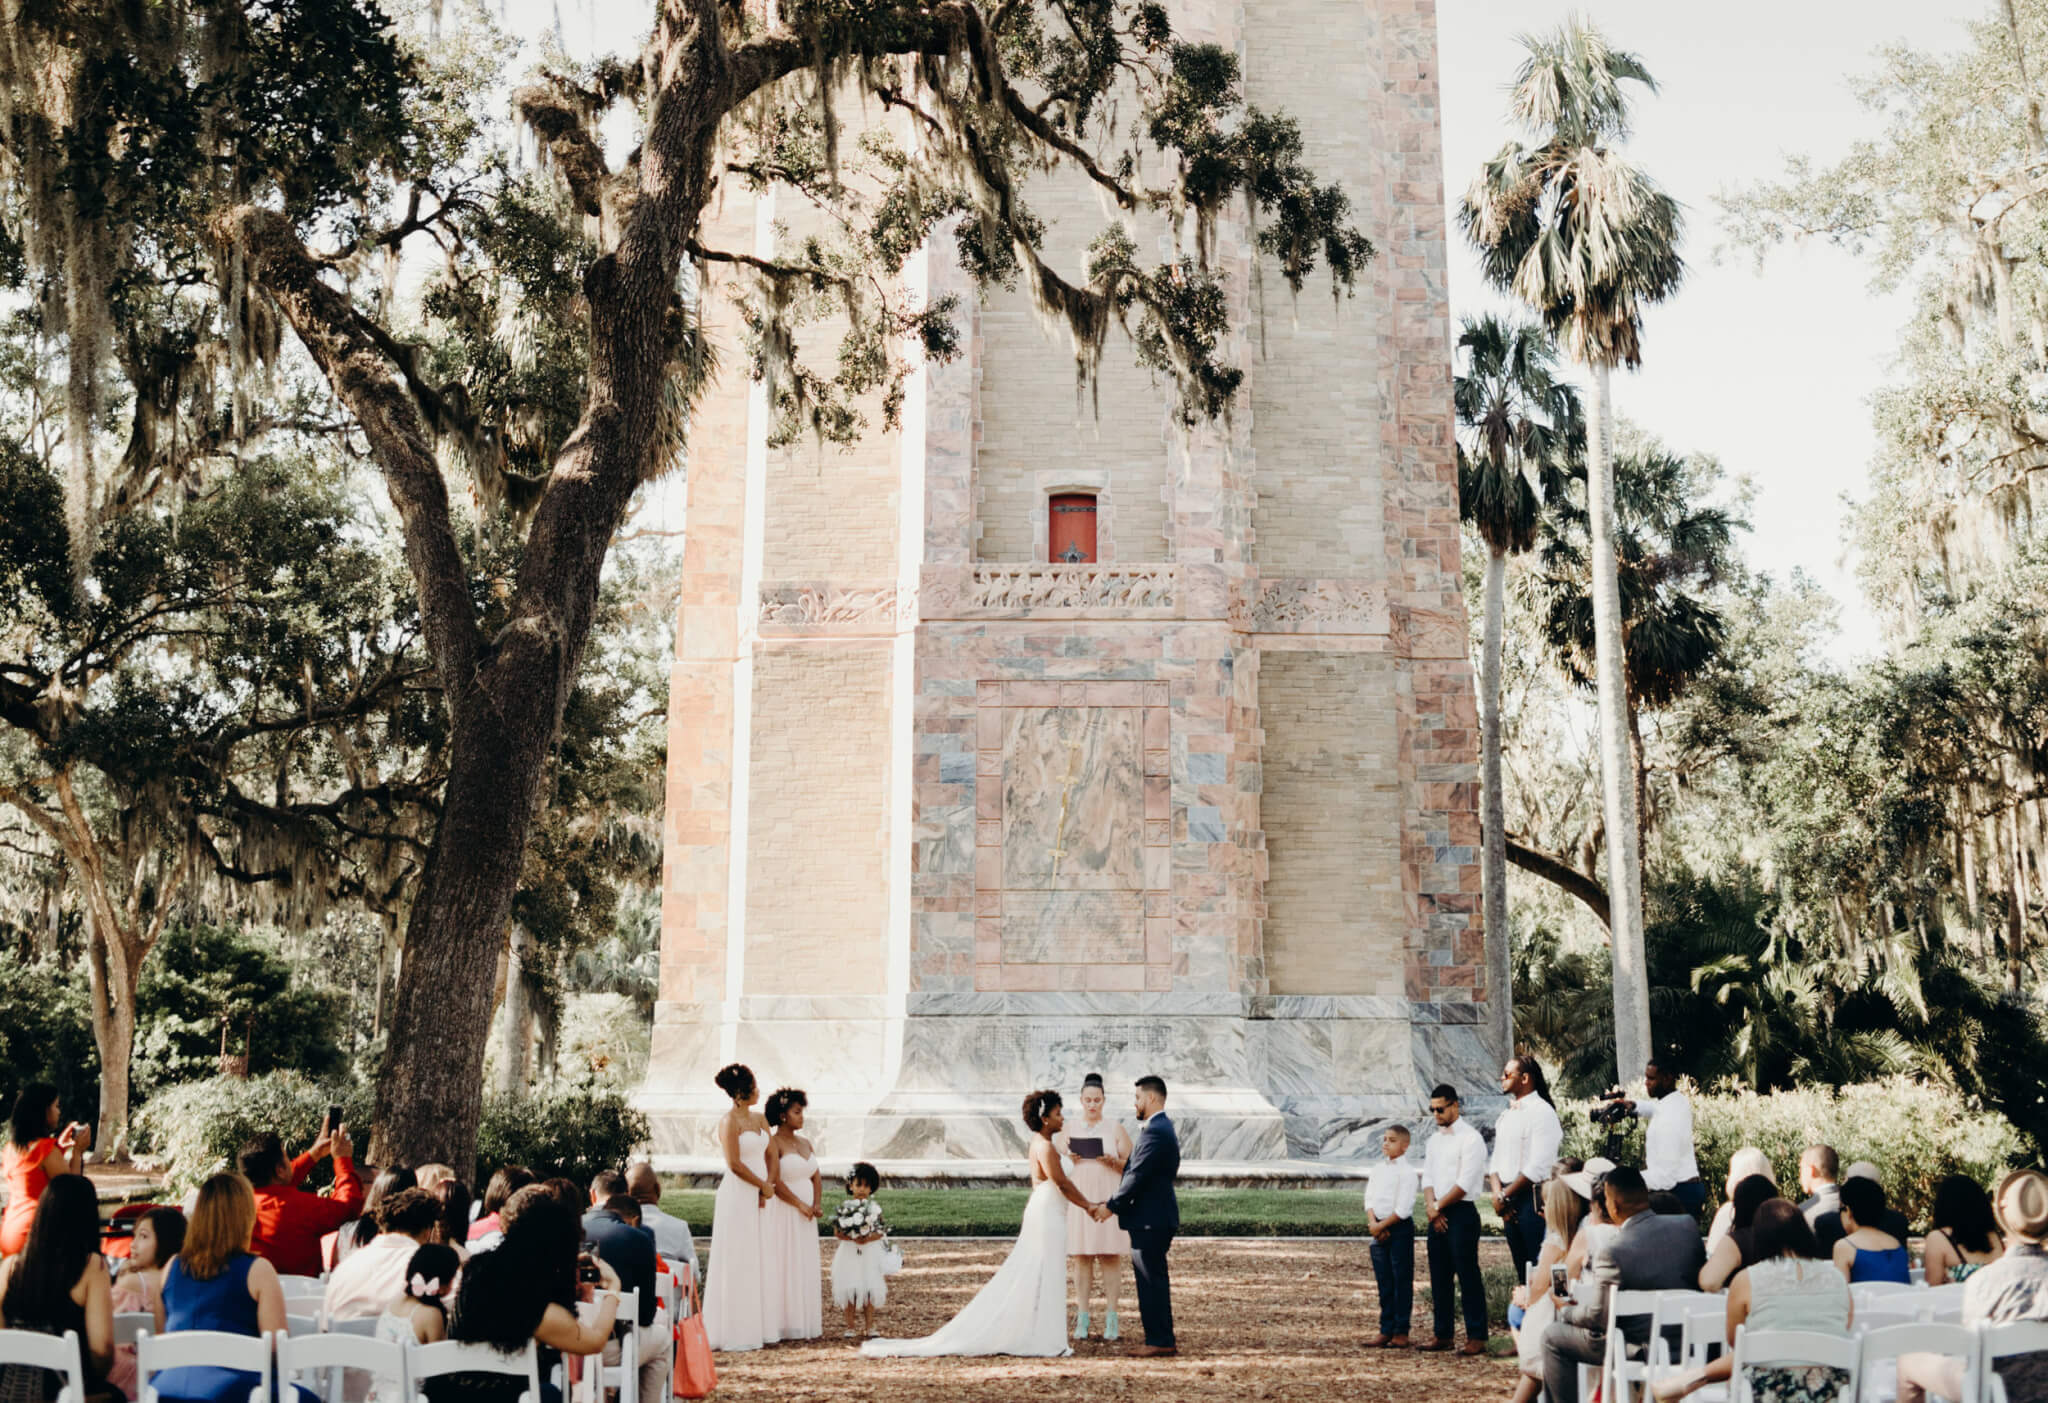 South Florida's Top Wedding Venues